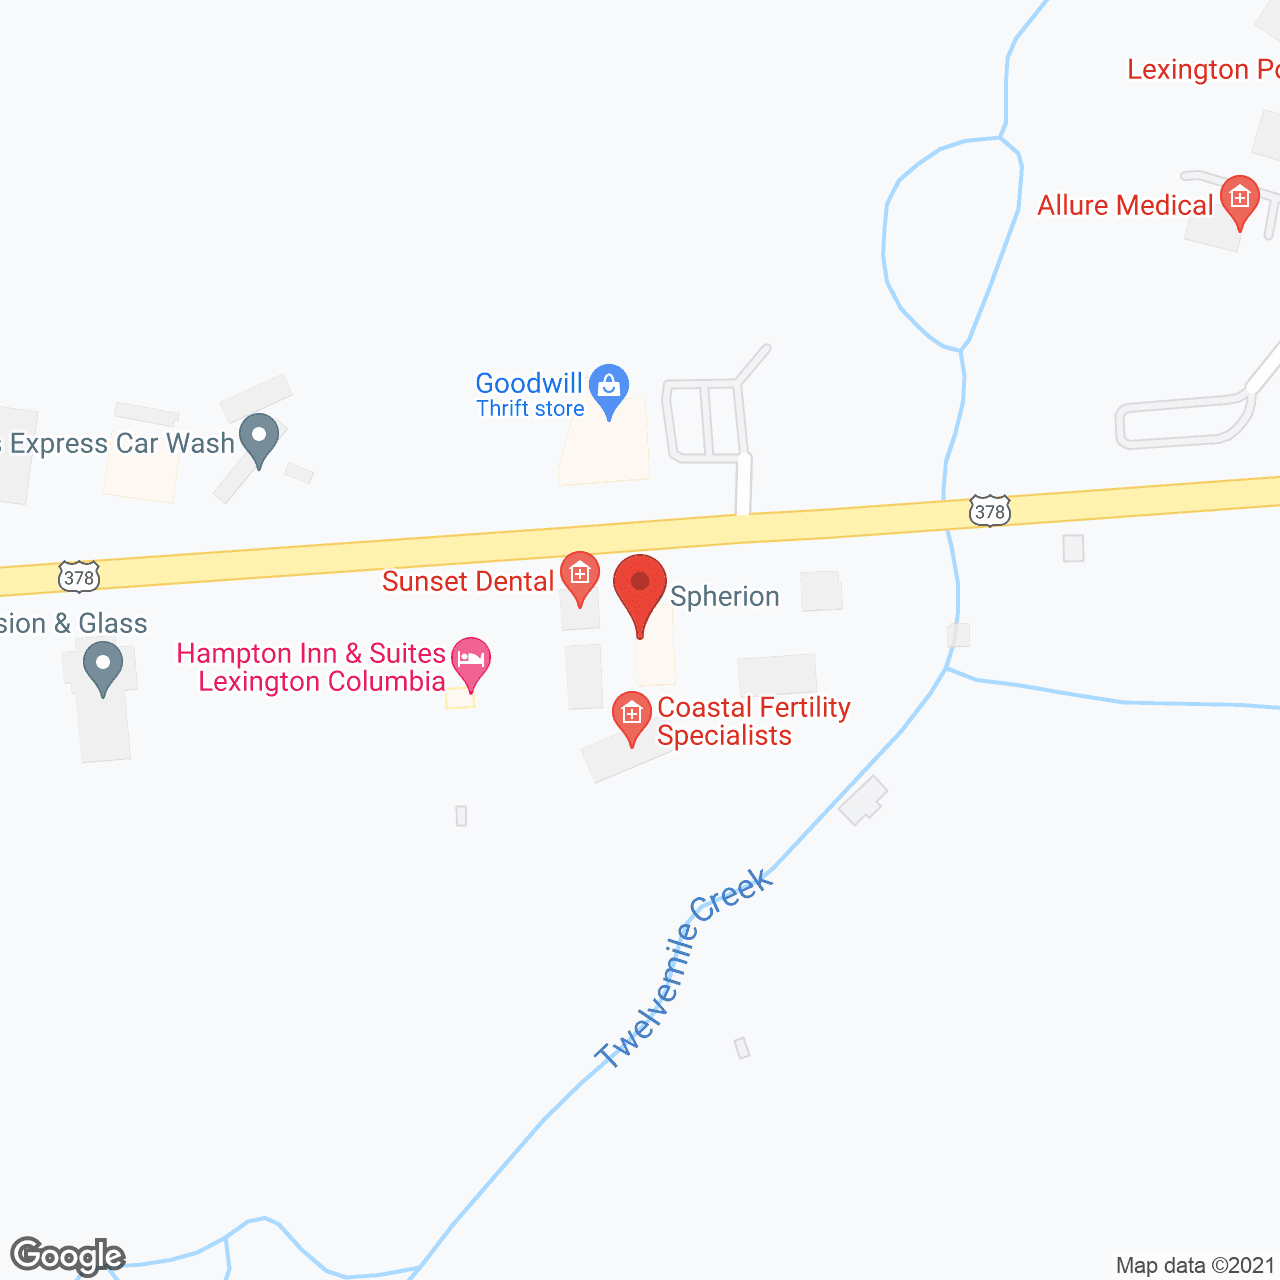 AllCaregivers in google map